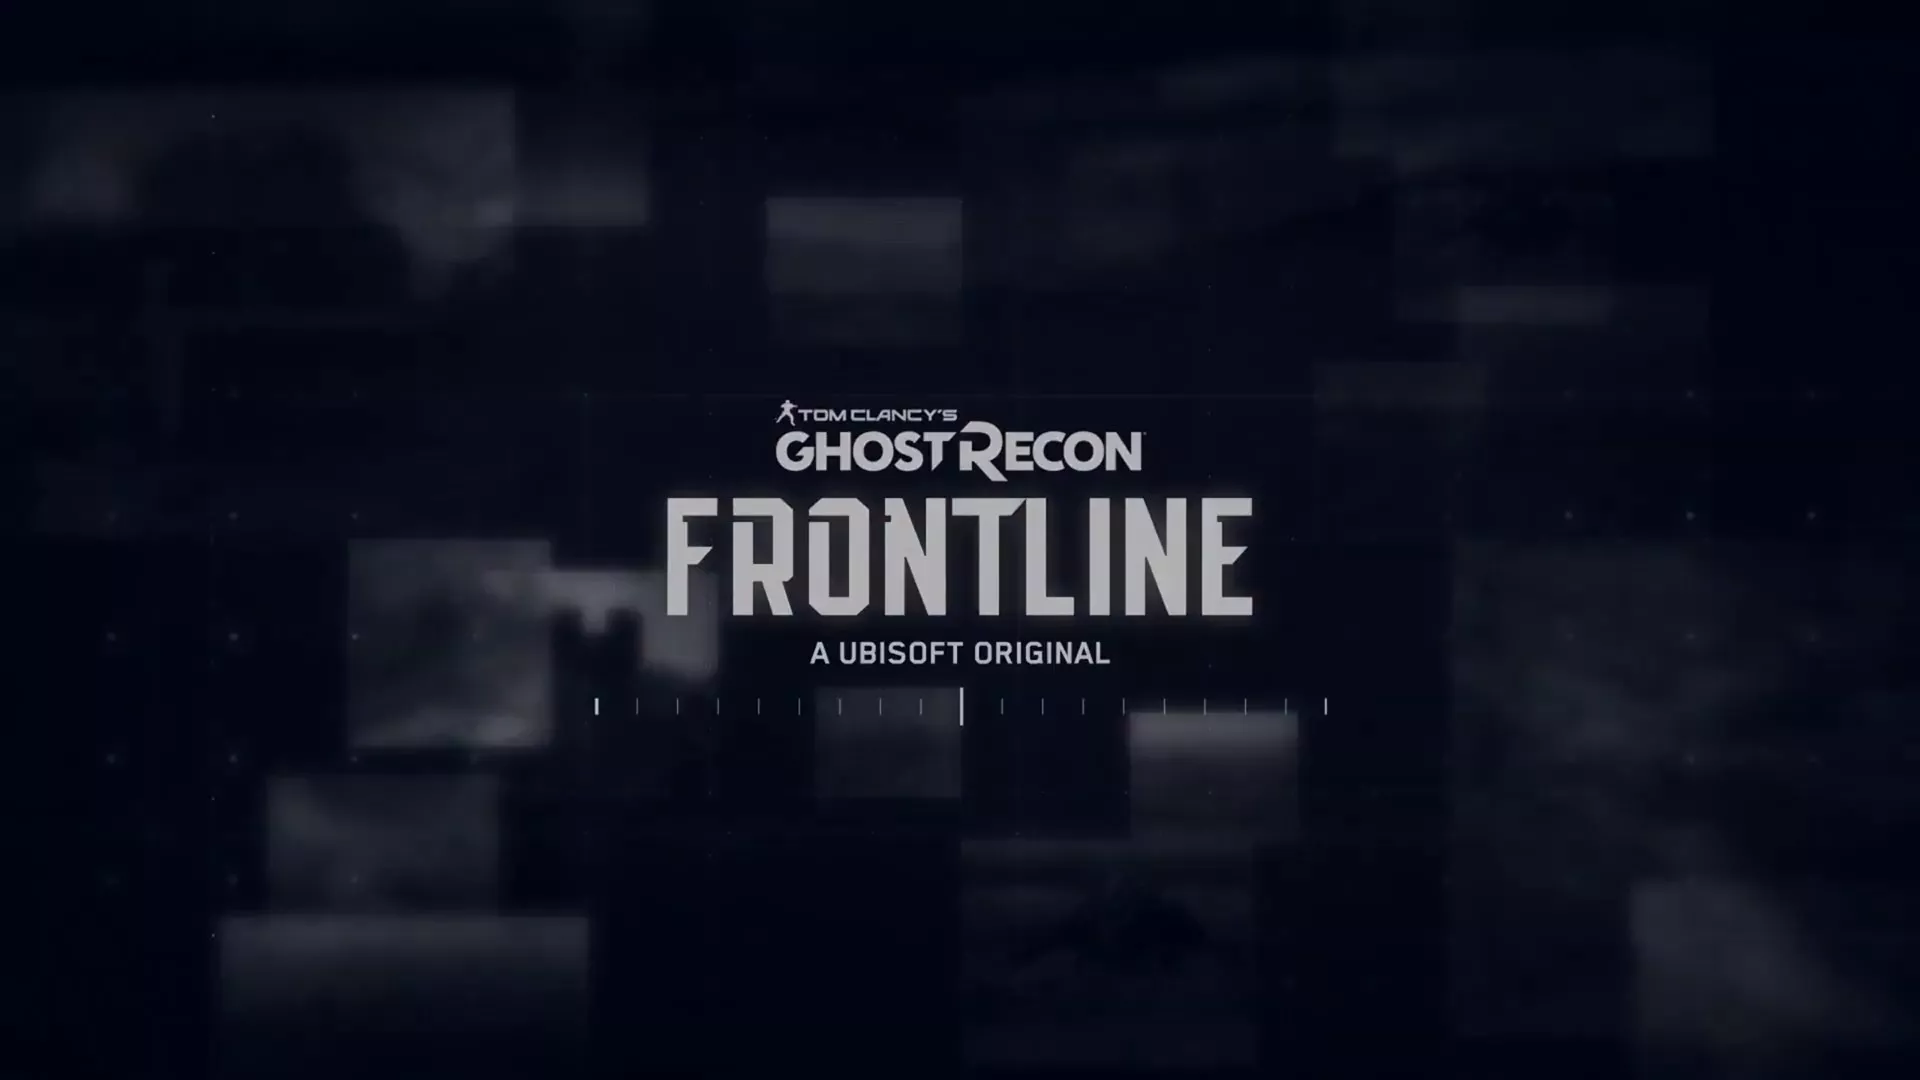 Ghost Recon Frontline - Battle Royale Spiel angekündigt Heropic